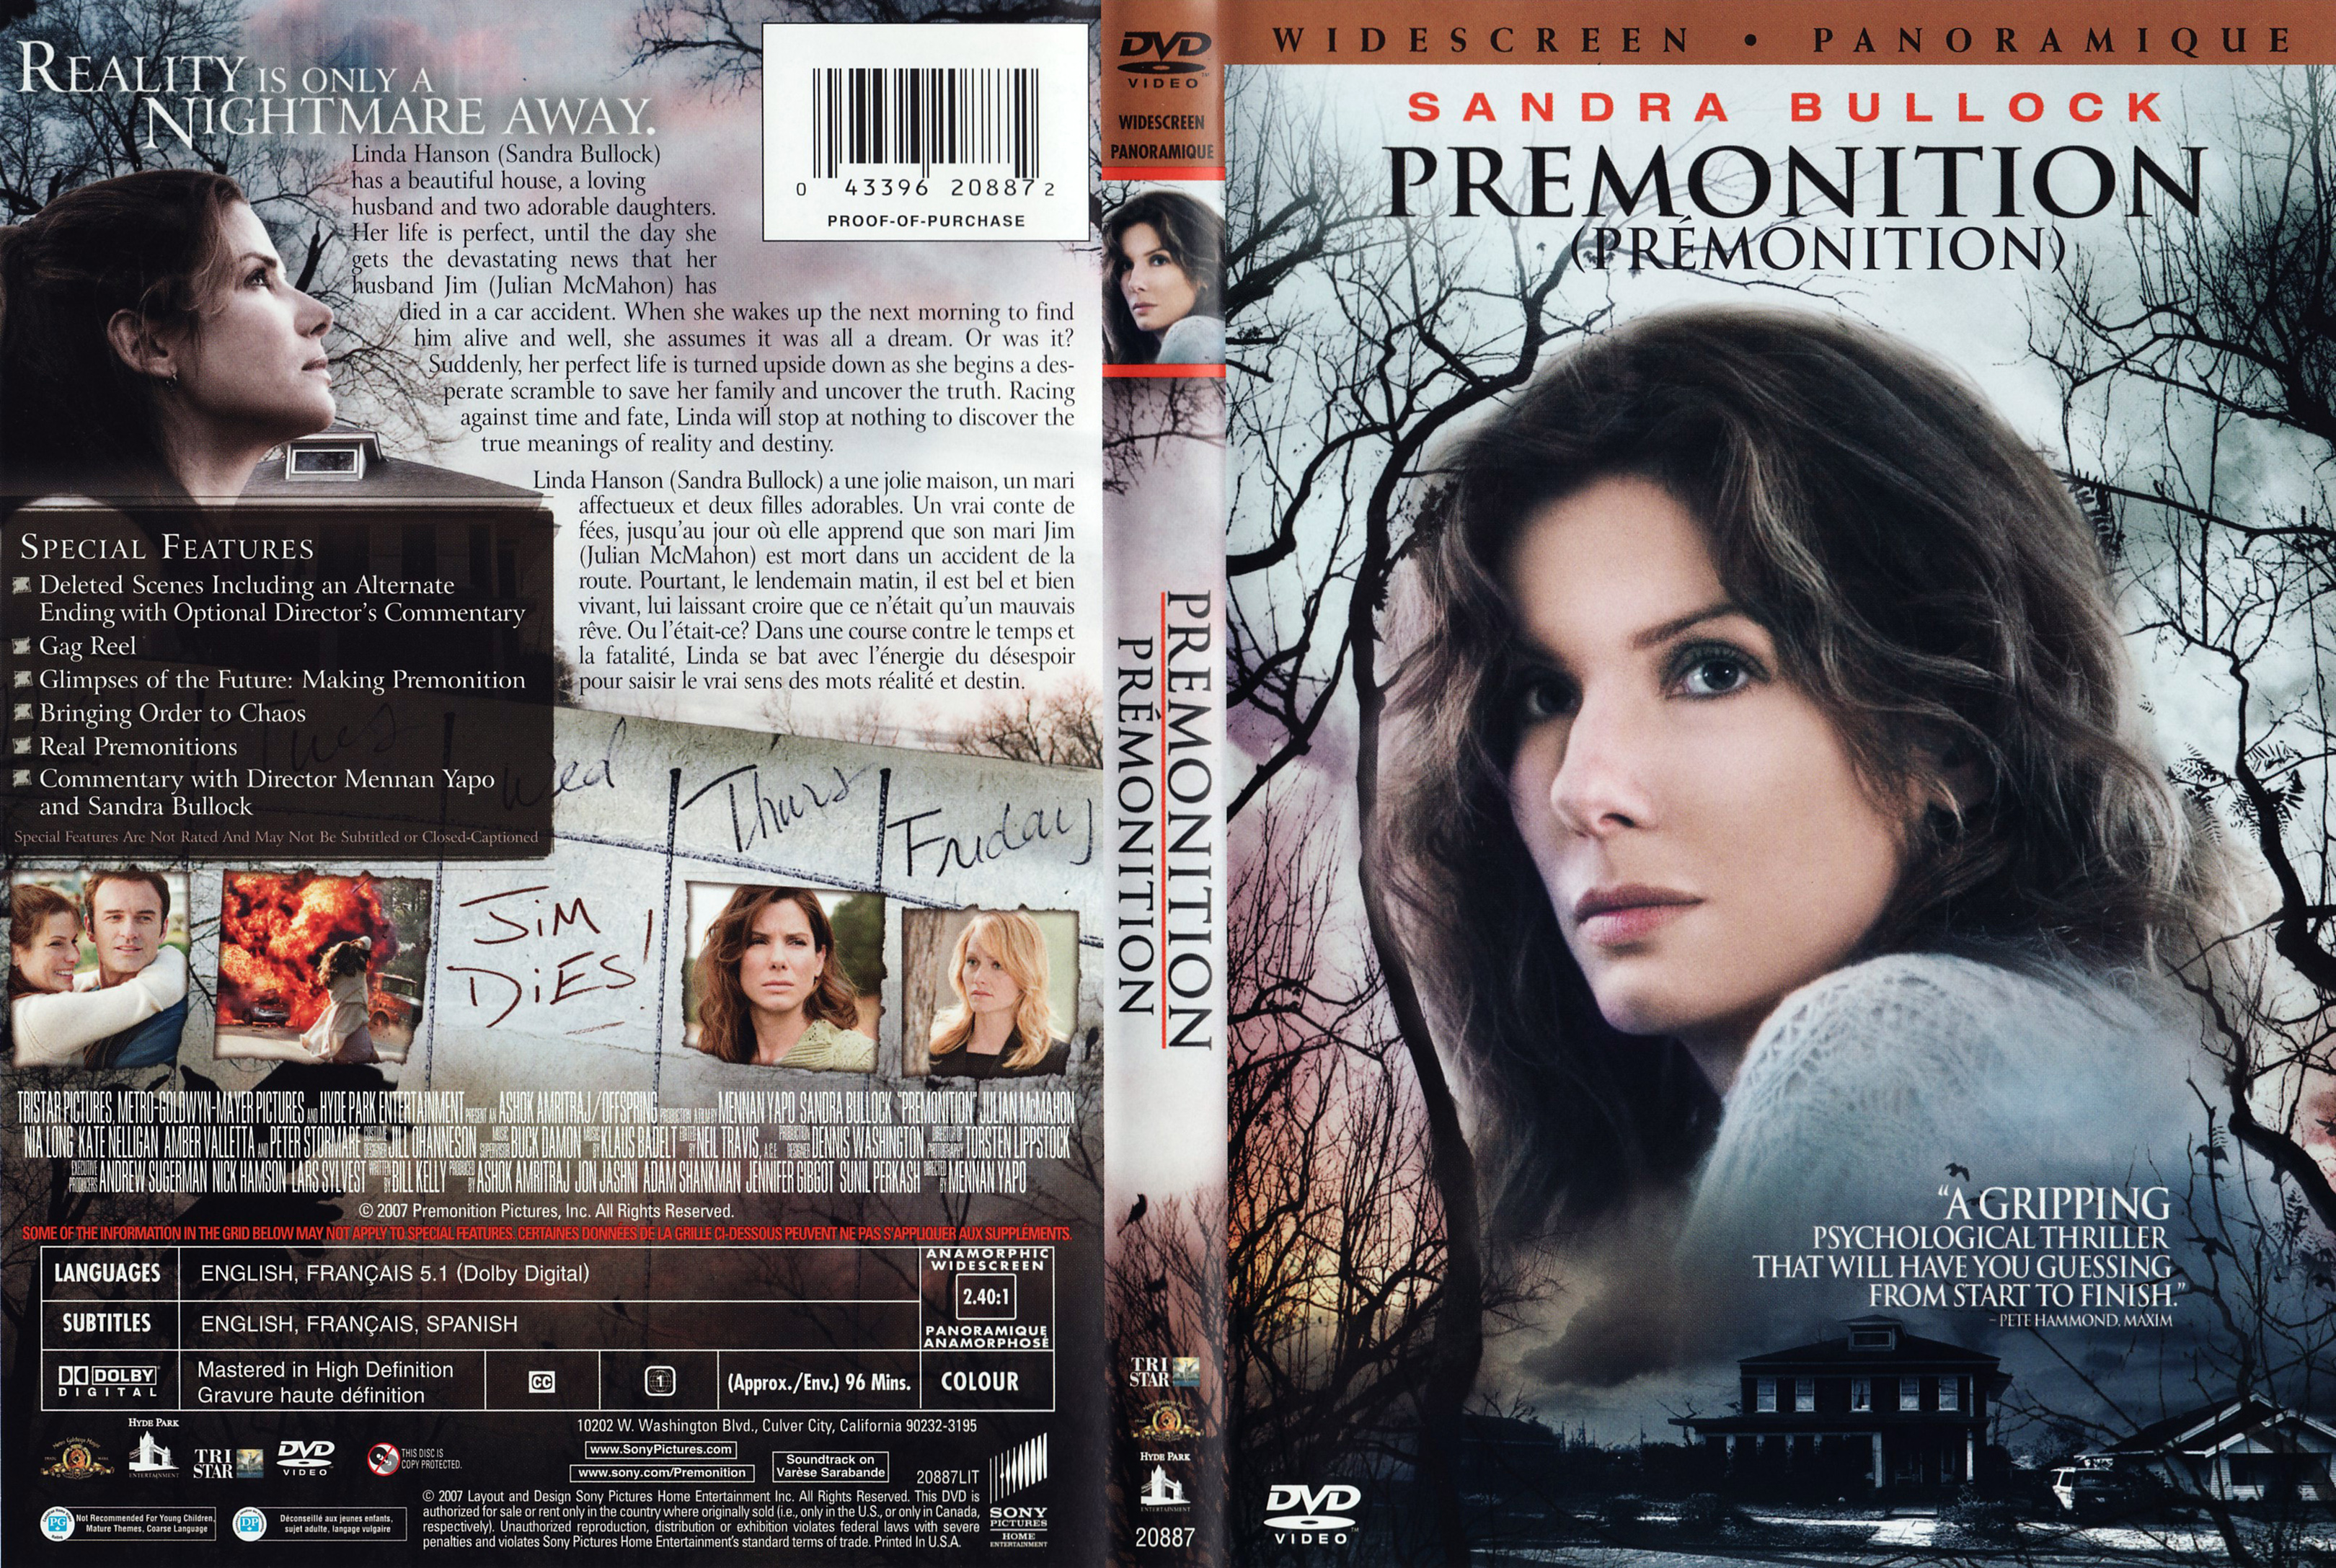 Jaquette DVD Prmonition (Sandra Bullock) (Canadienne)